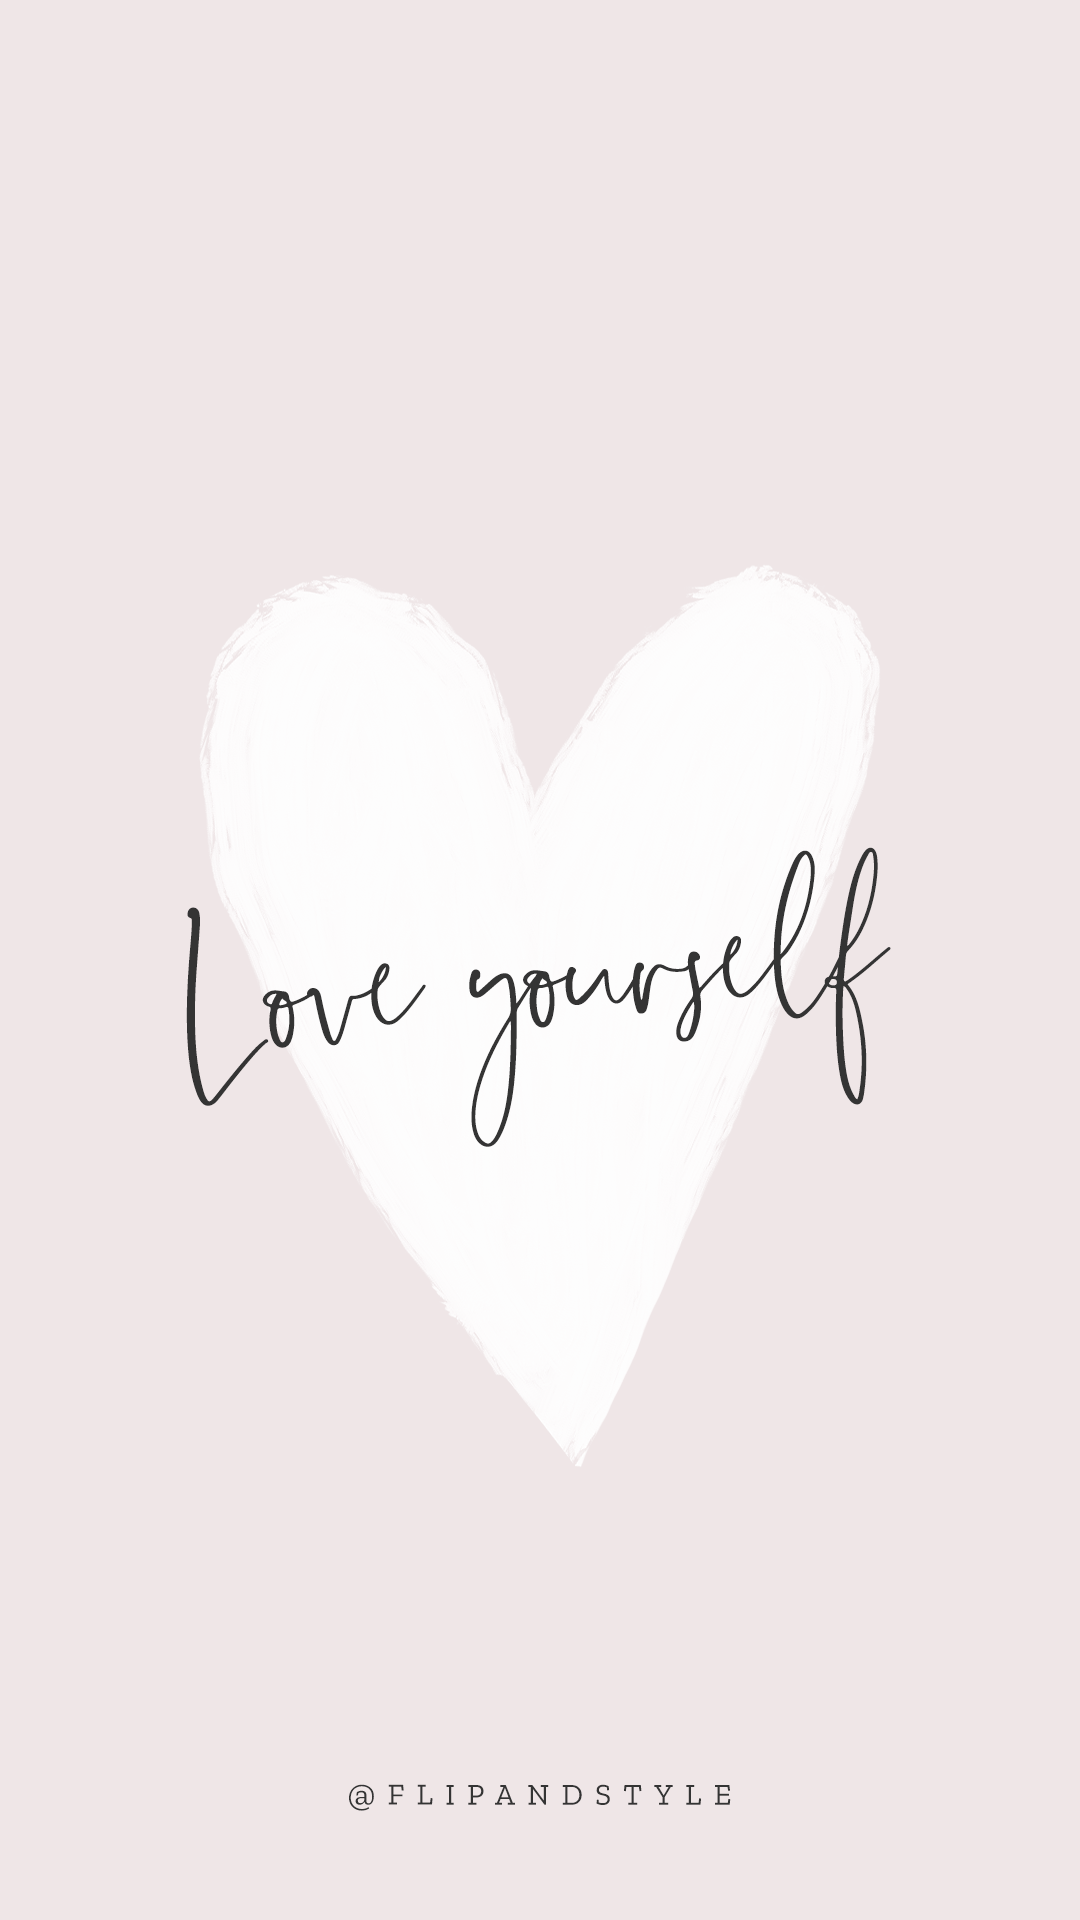 Yourself love 25 Ways